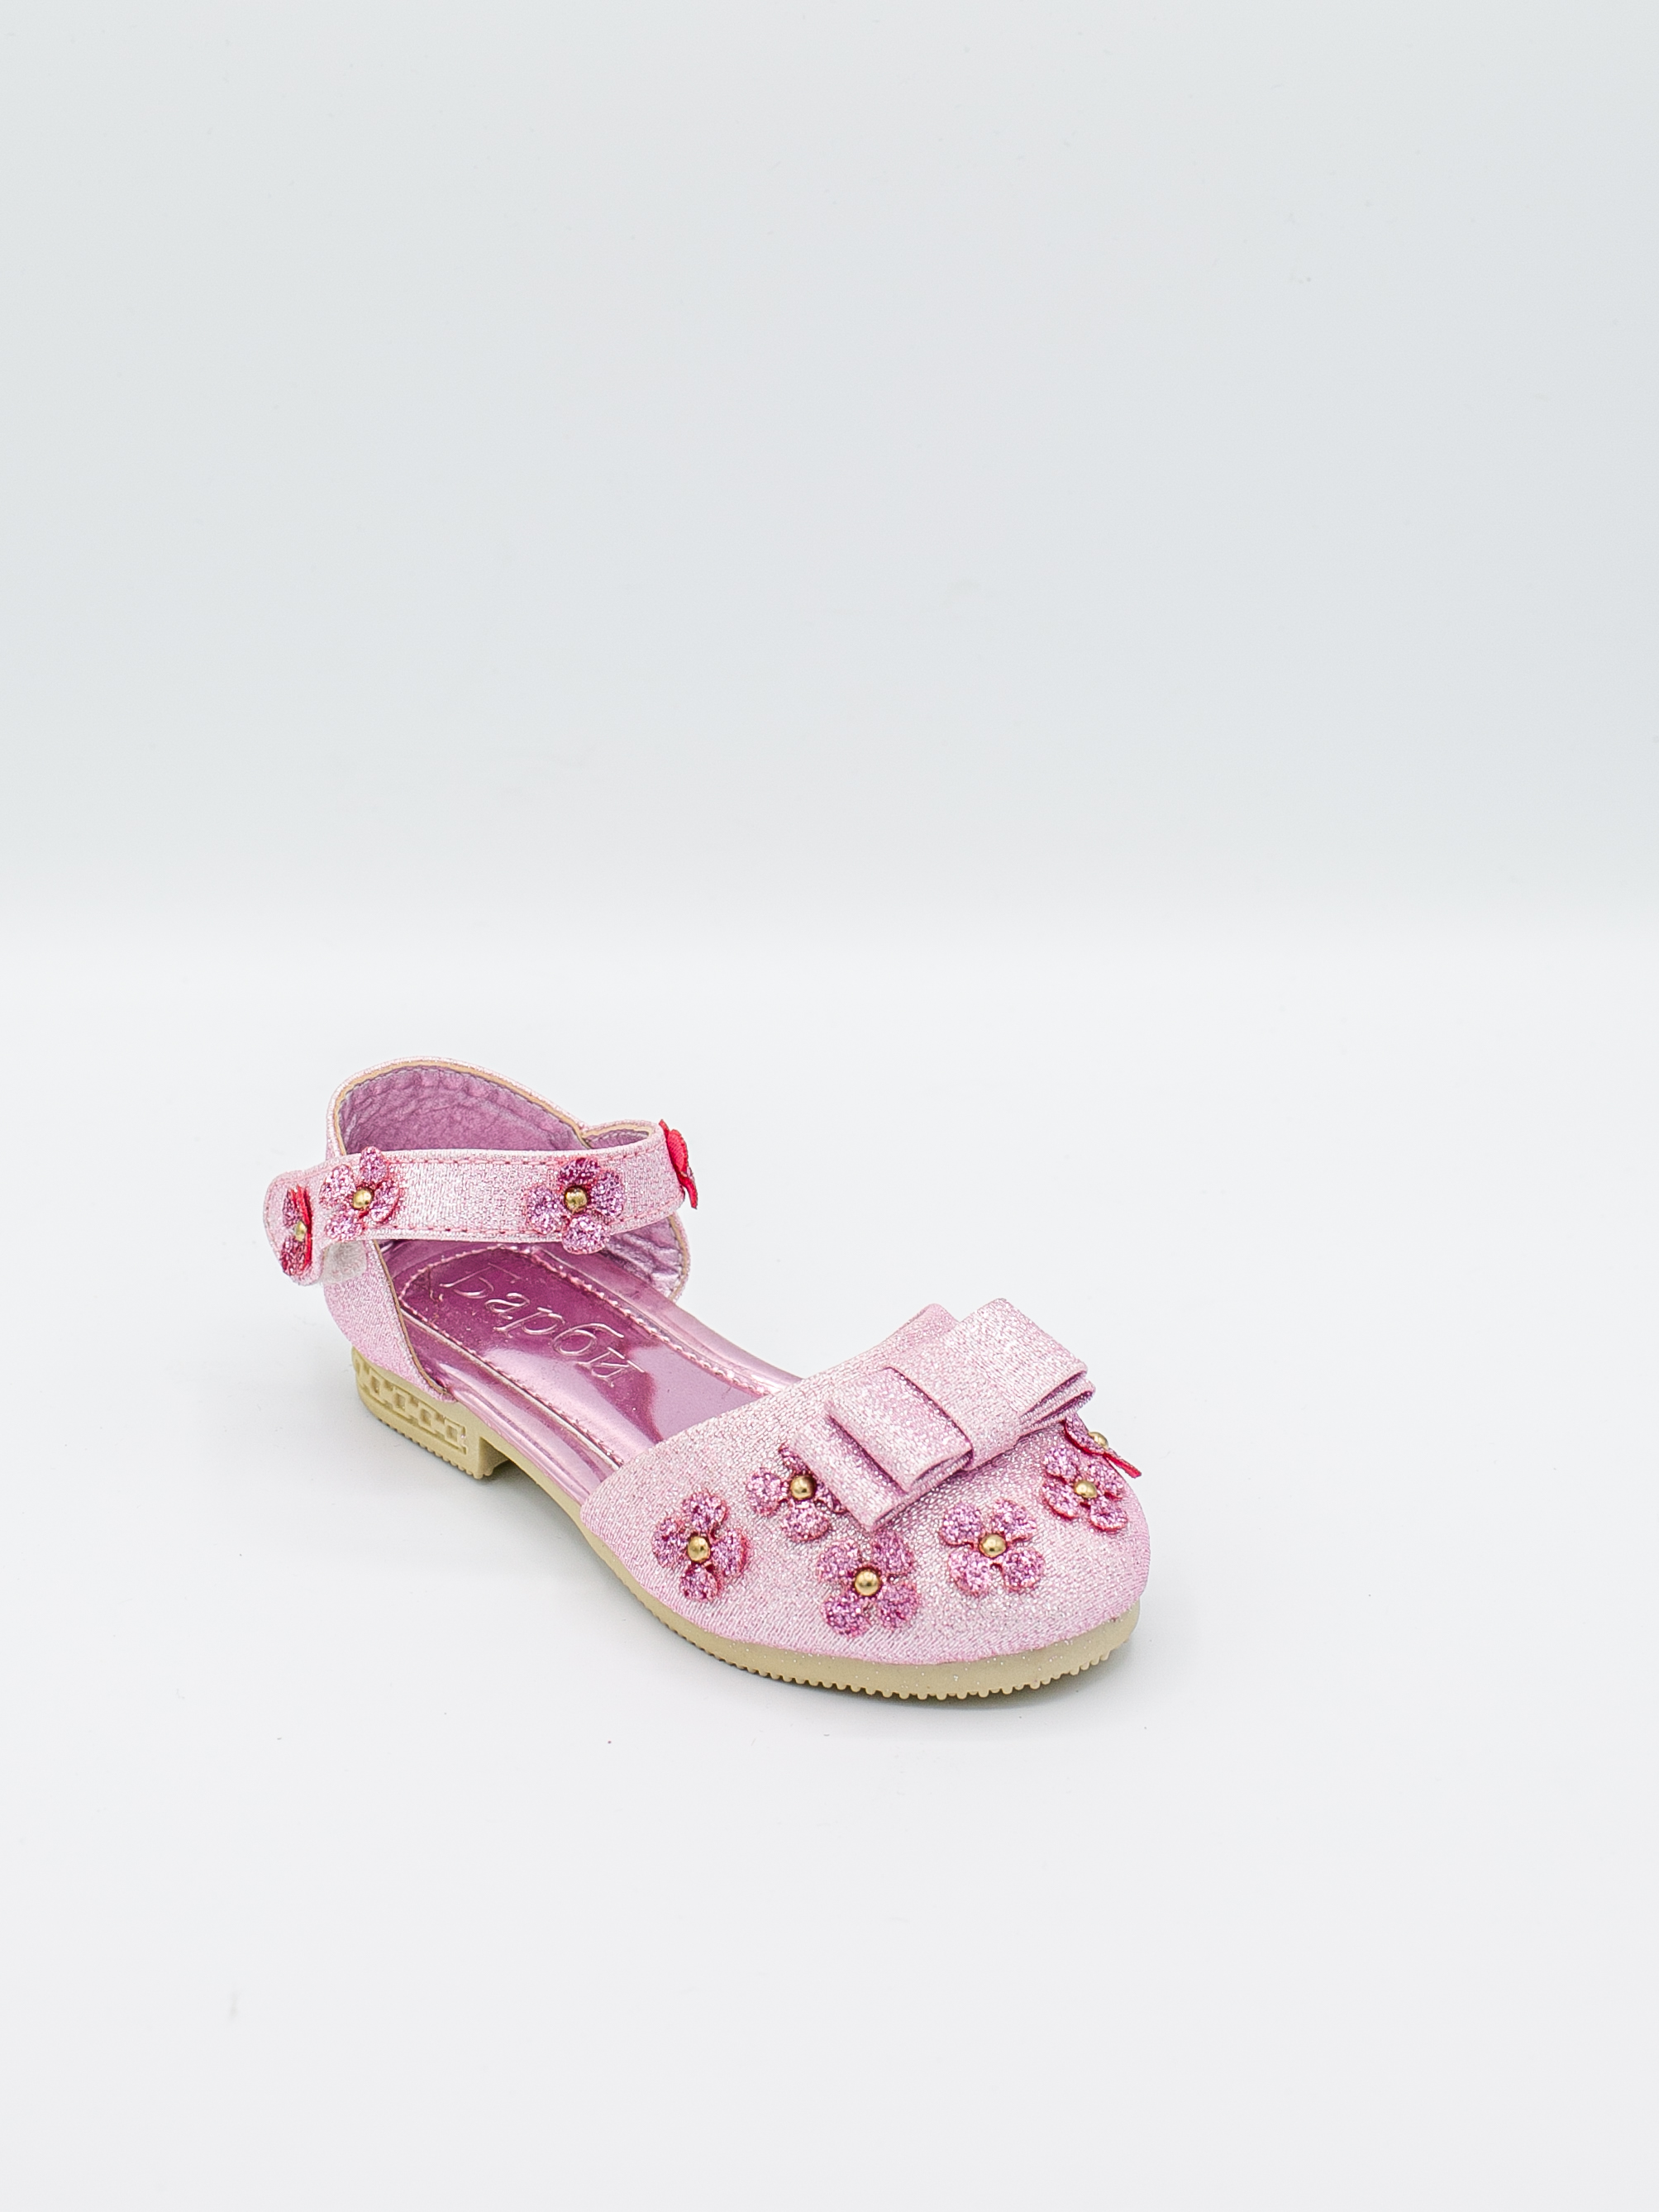 картинка Туфельки Барби цветочки бантик липучка ассортимент  [Золото/Серебро/Пудра] от магазина Одежда-